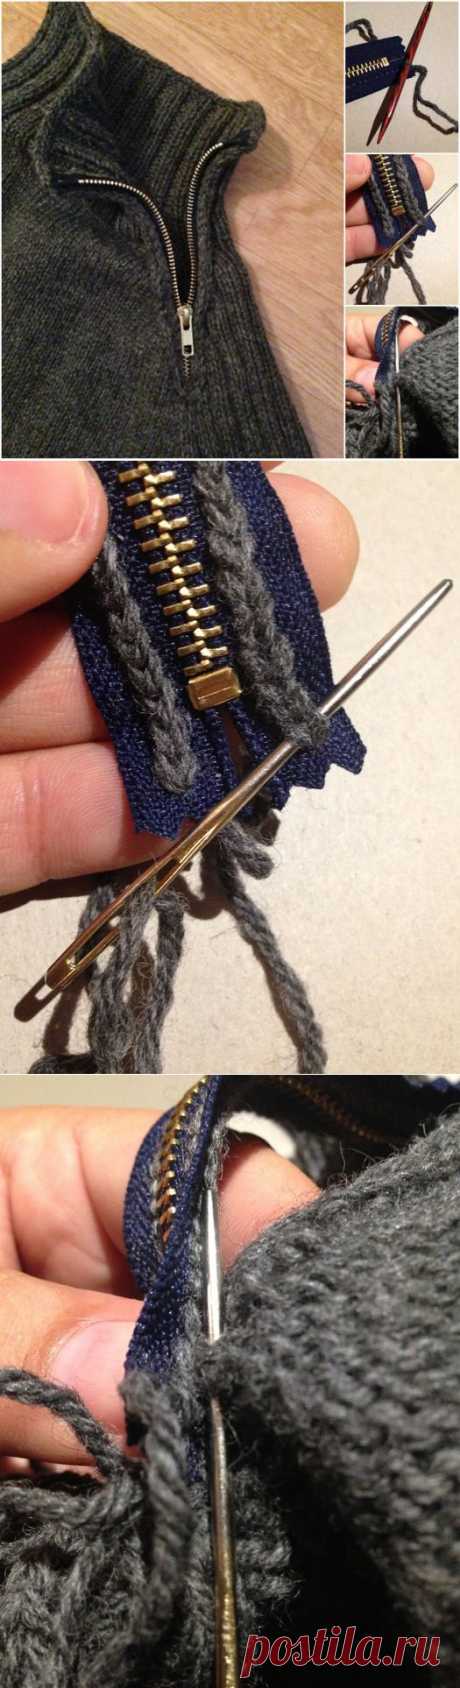 How to DIY Crochet a Zipper into Sweaters | www.FabArtDIY.com